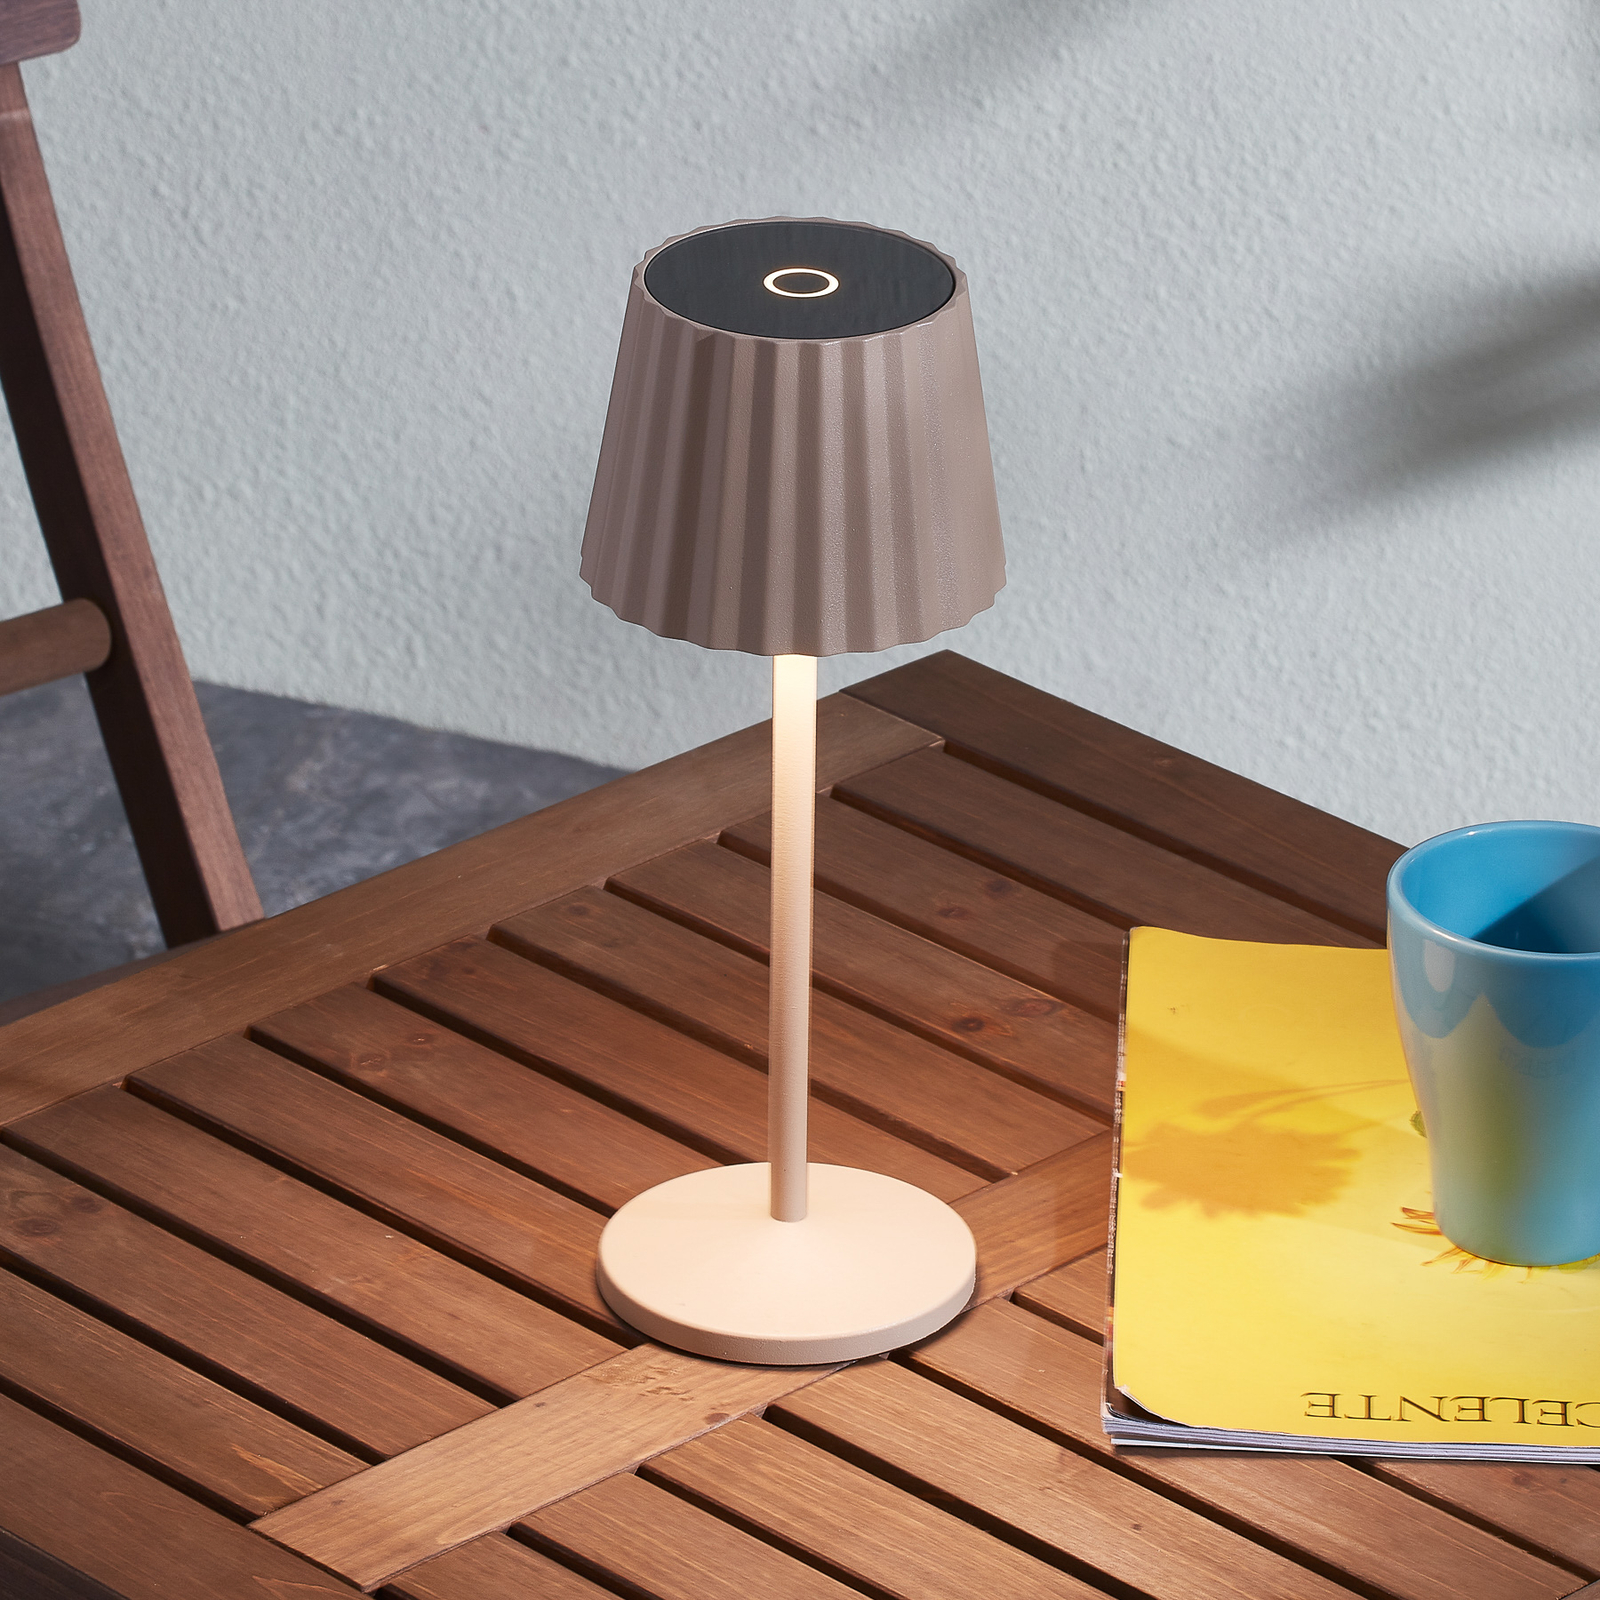 Akumulatorowa lampa stołowa LED Esali, piaskowy beż, zestaw 3 sztuk